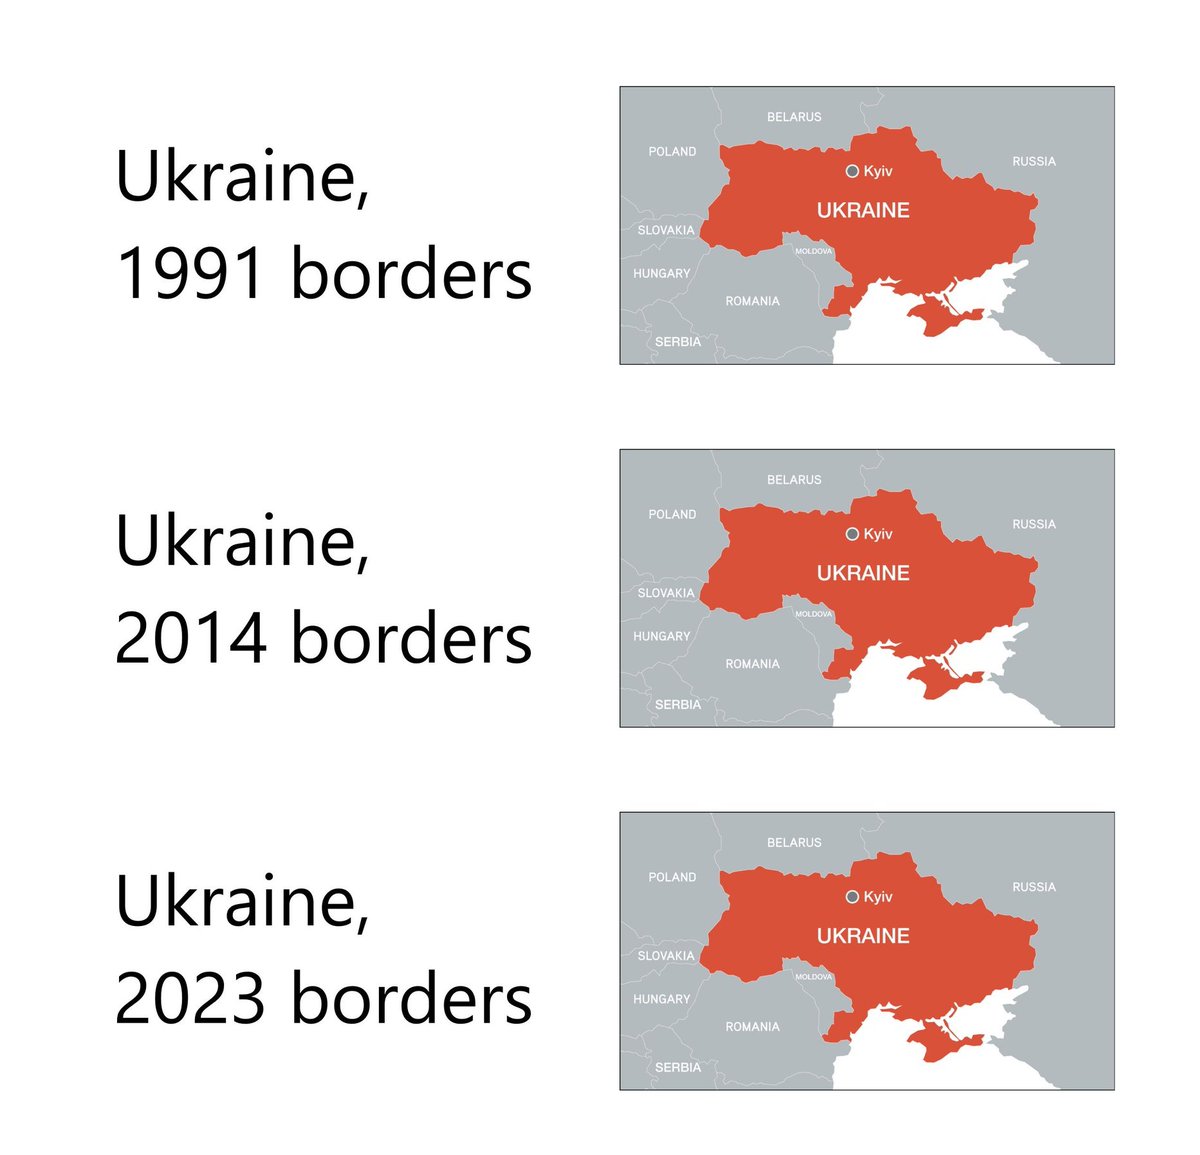 Crimea is Ukraine.

Donetsk is Ukraine.

Luhansk is Ukraine.

Zaporizhzhia is Ukraine.

Kherson is Ukraine.

Occupation ≠ Ownership